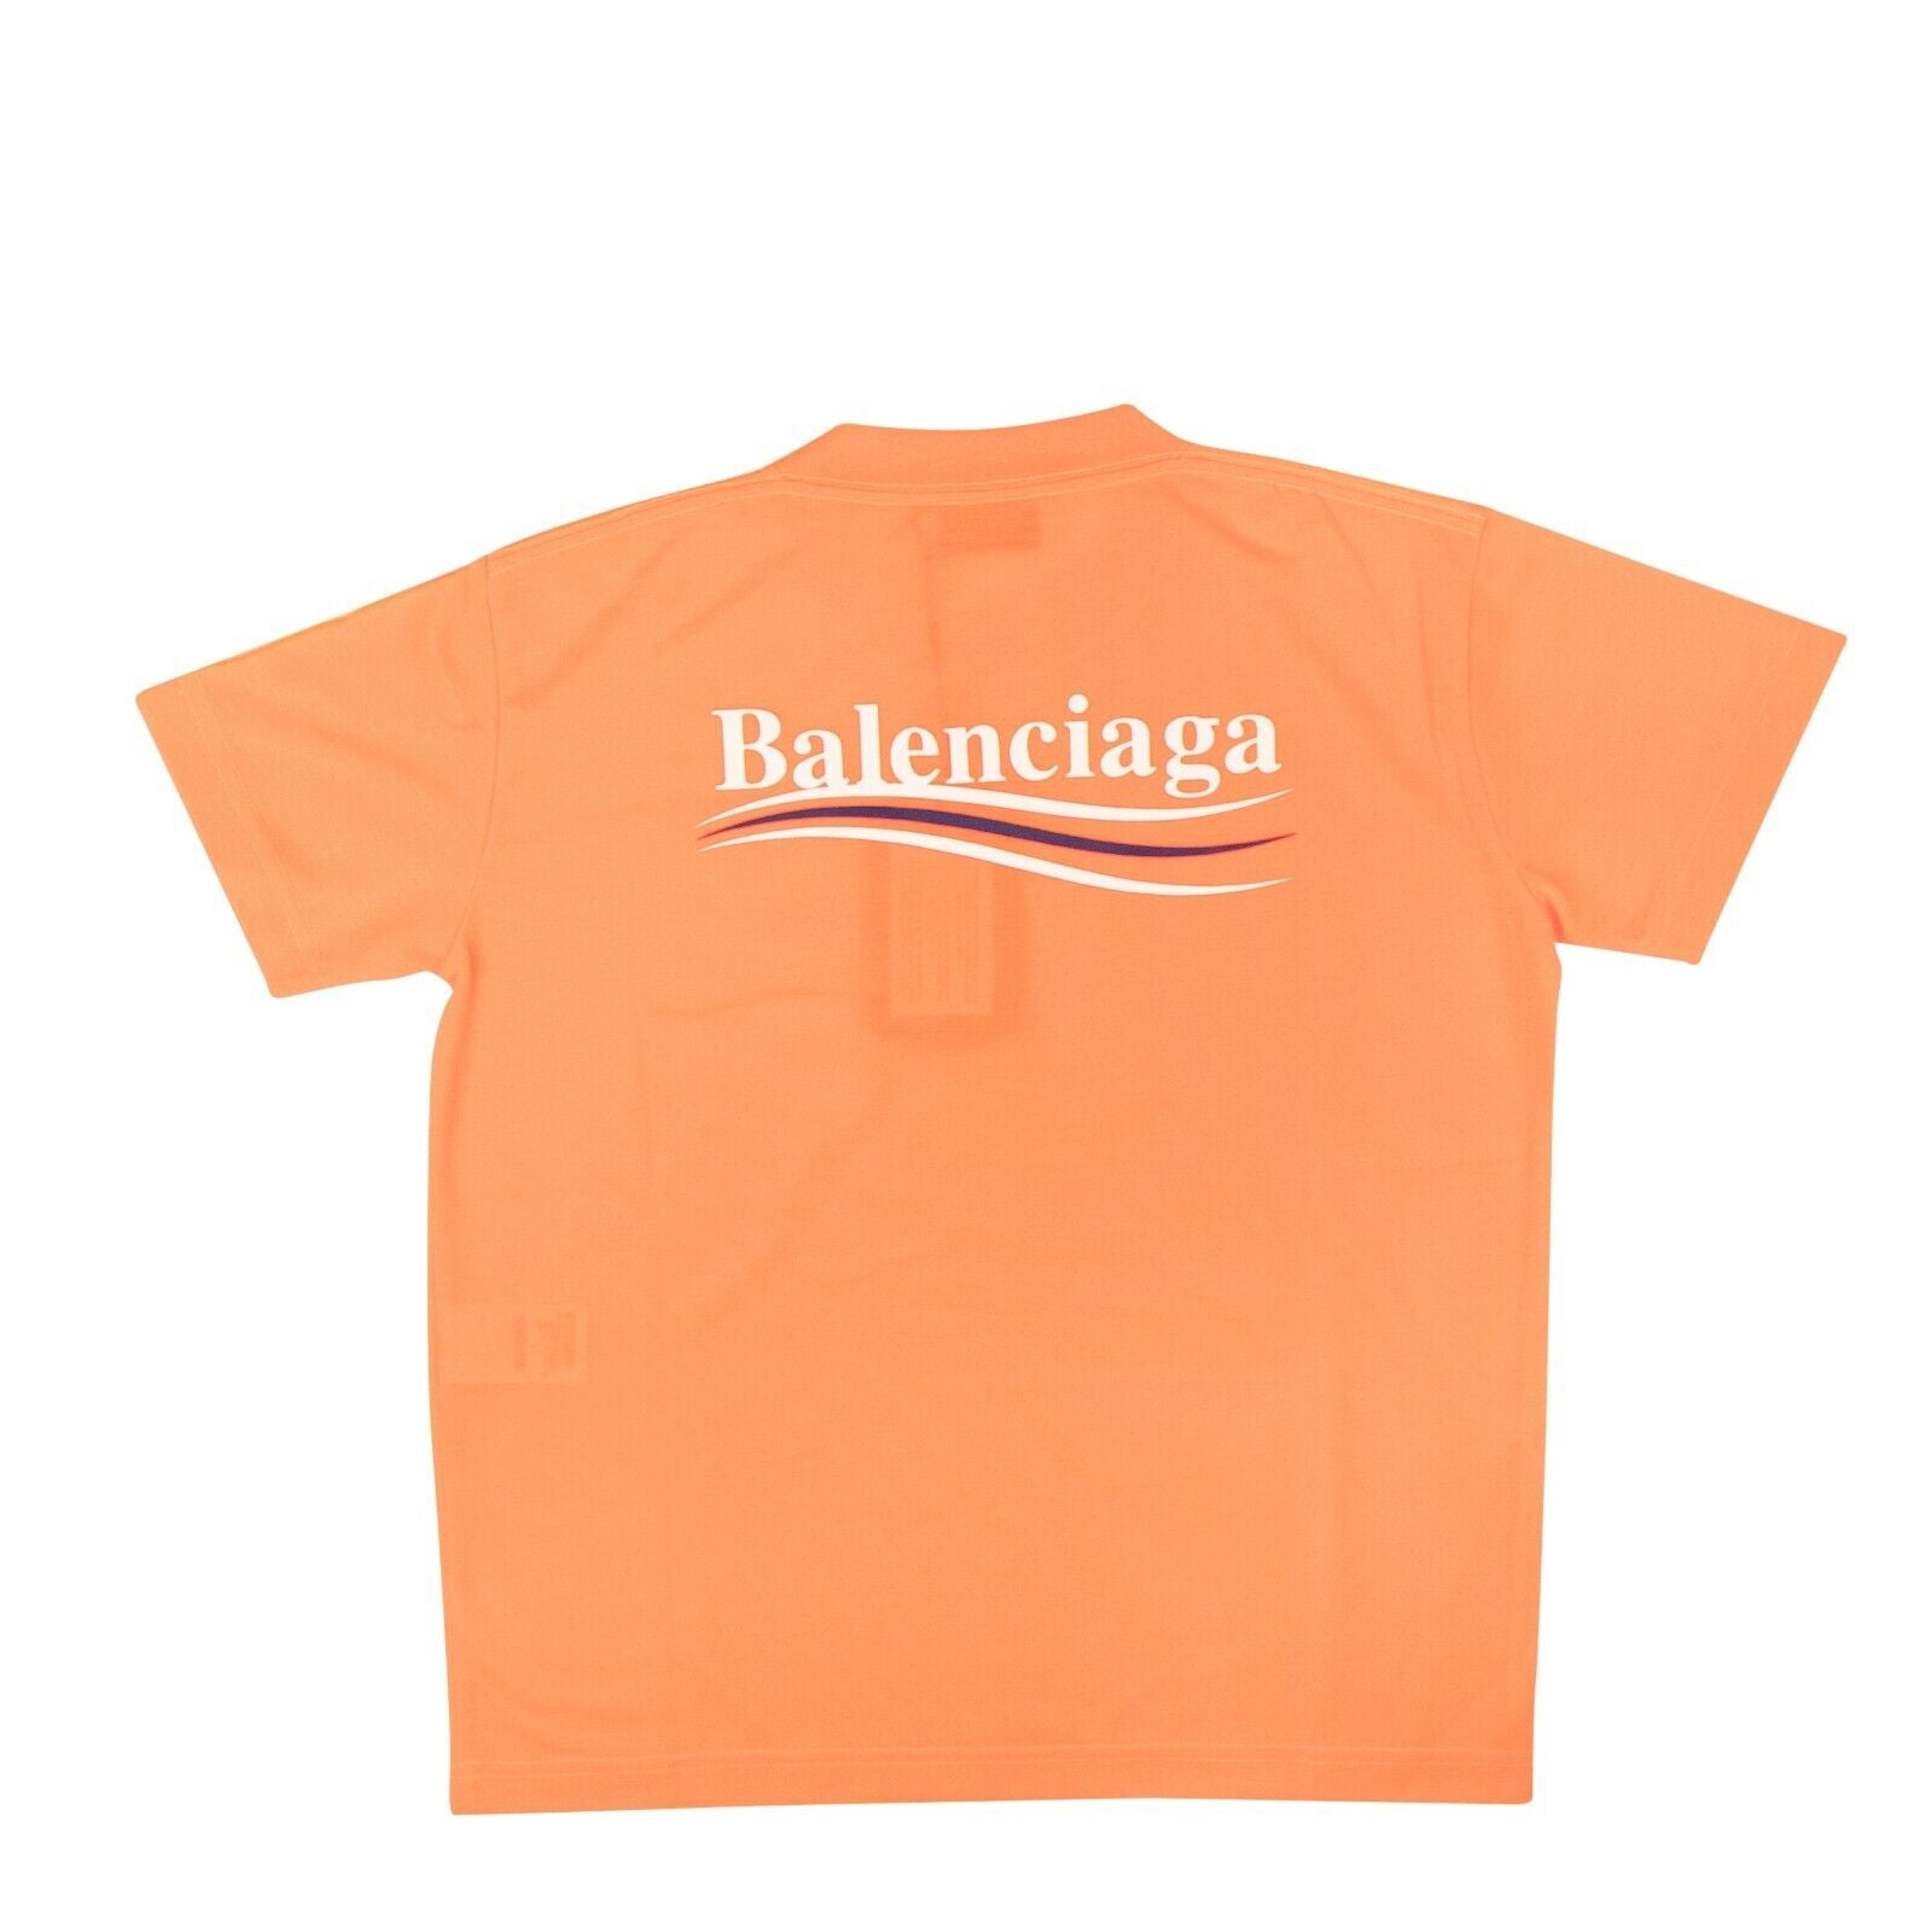 Alternate View 4 of Balenciaga Political Campaign T-Shirt - Orange